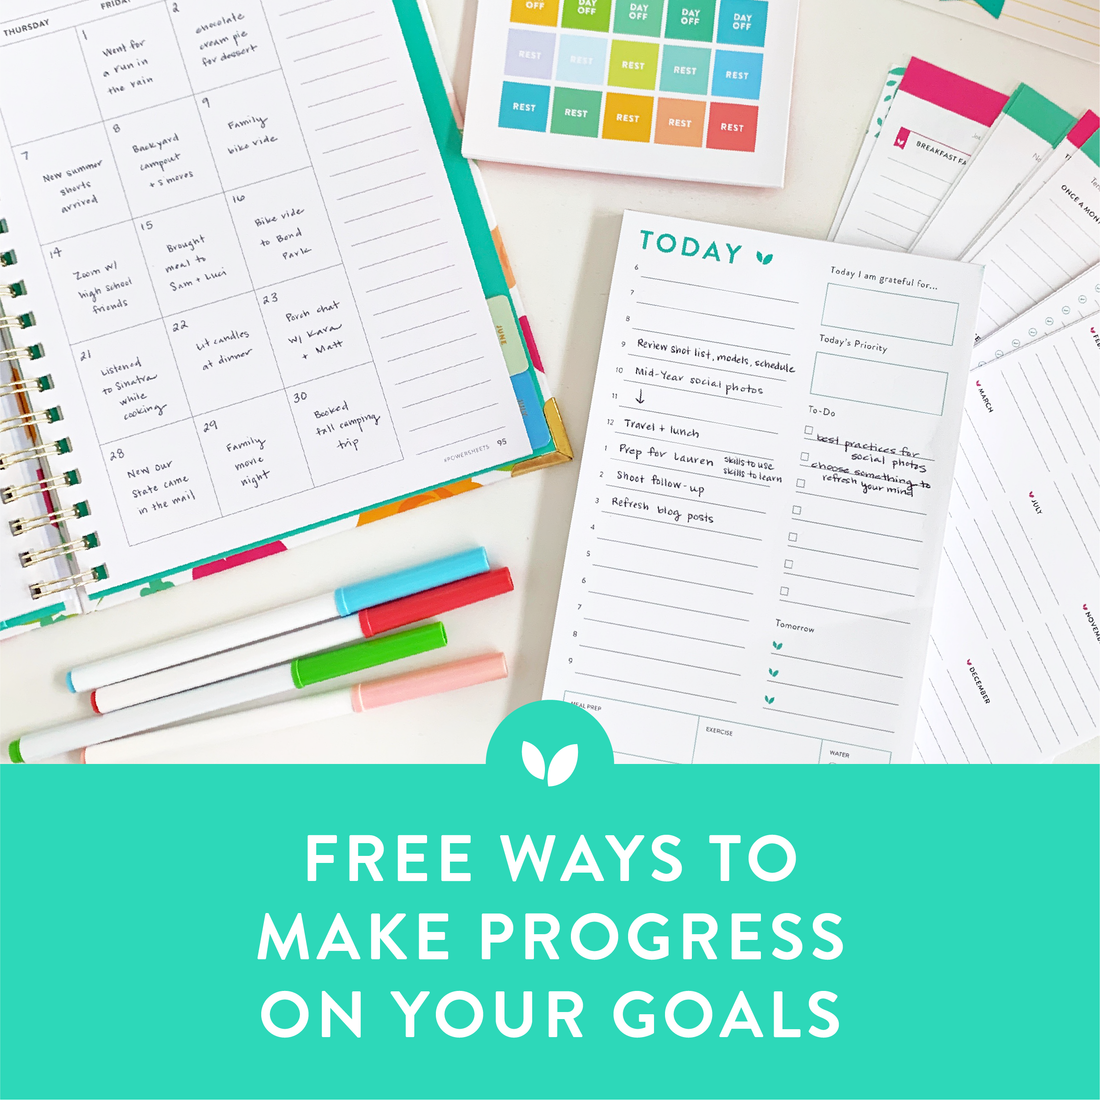 FREE Ways to Make Progress on Your Goals